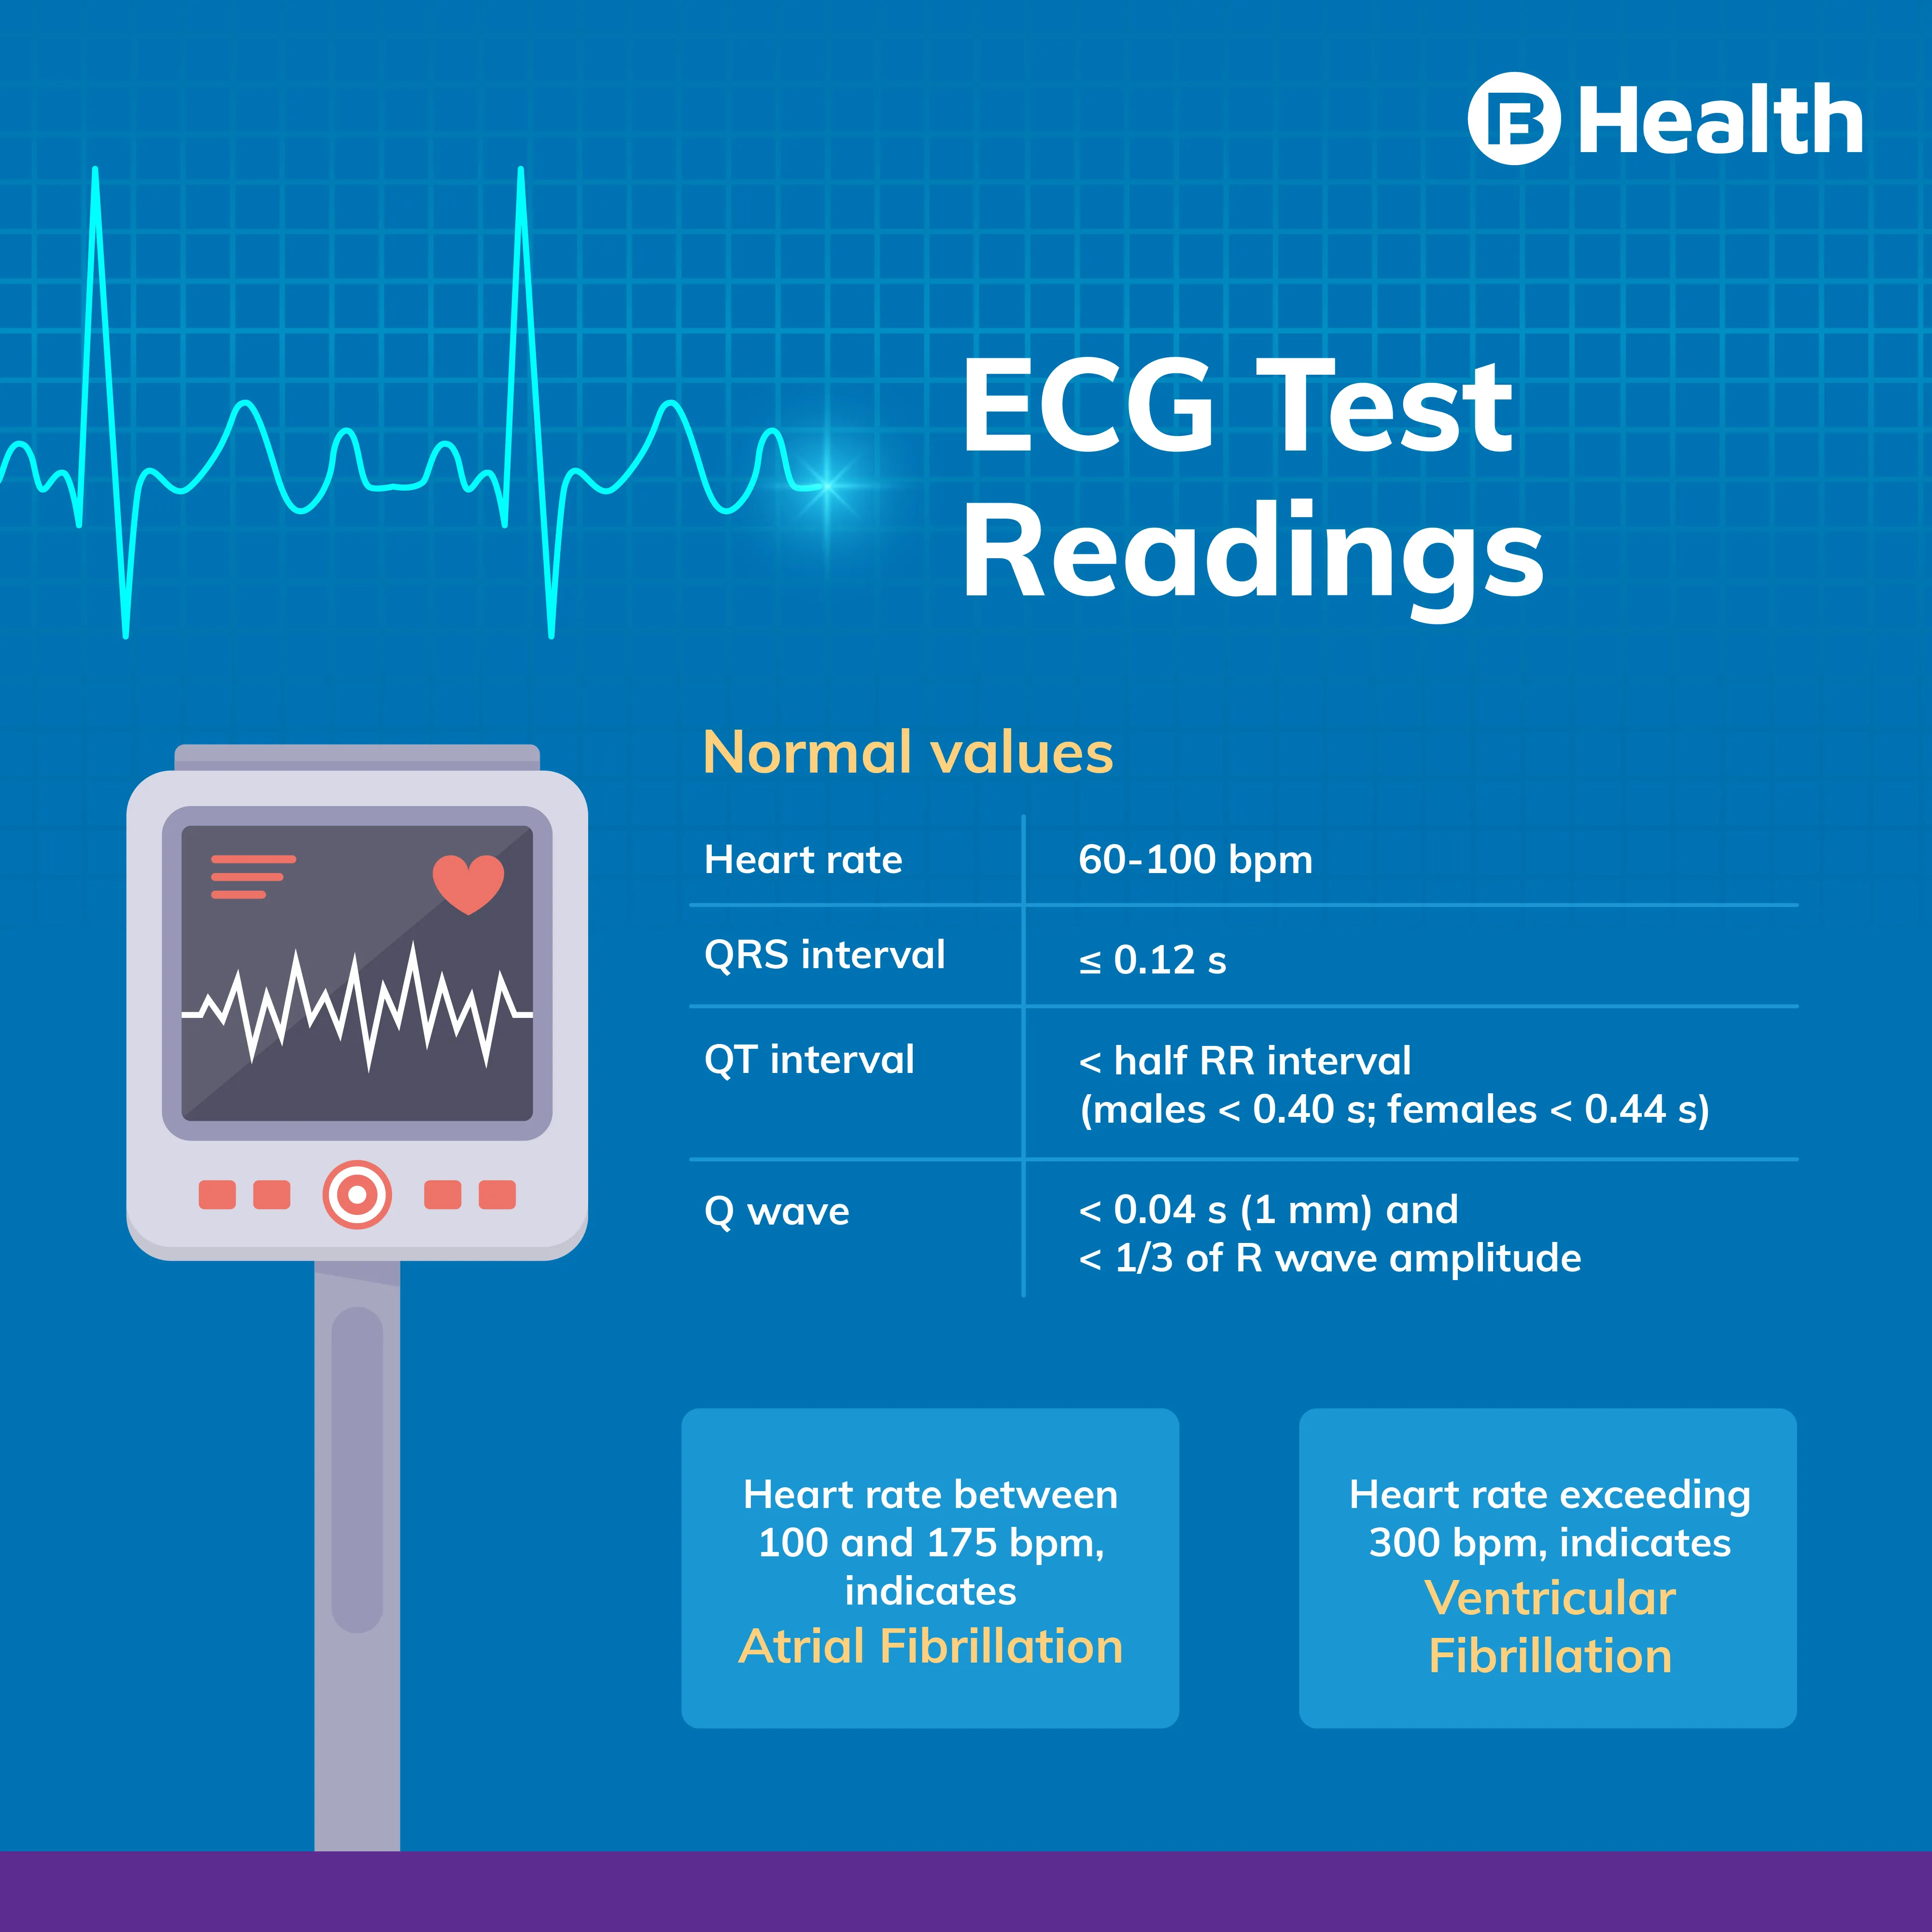 ECG test readings